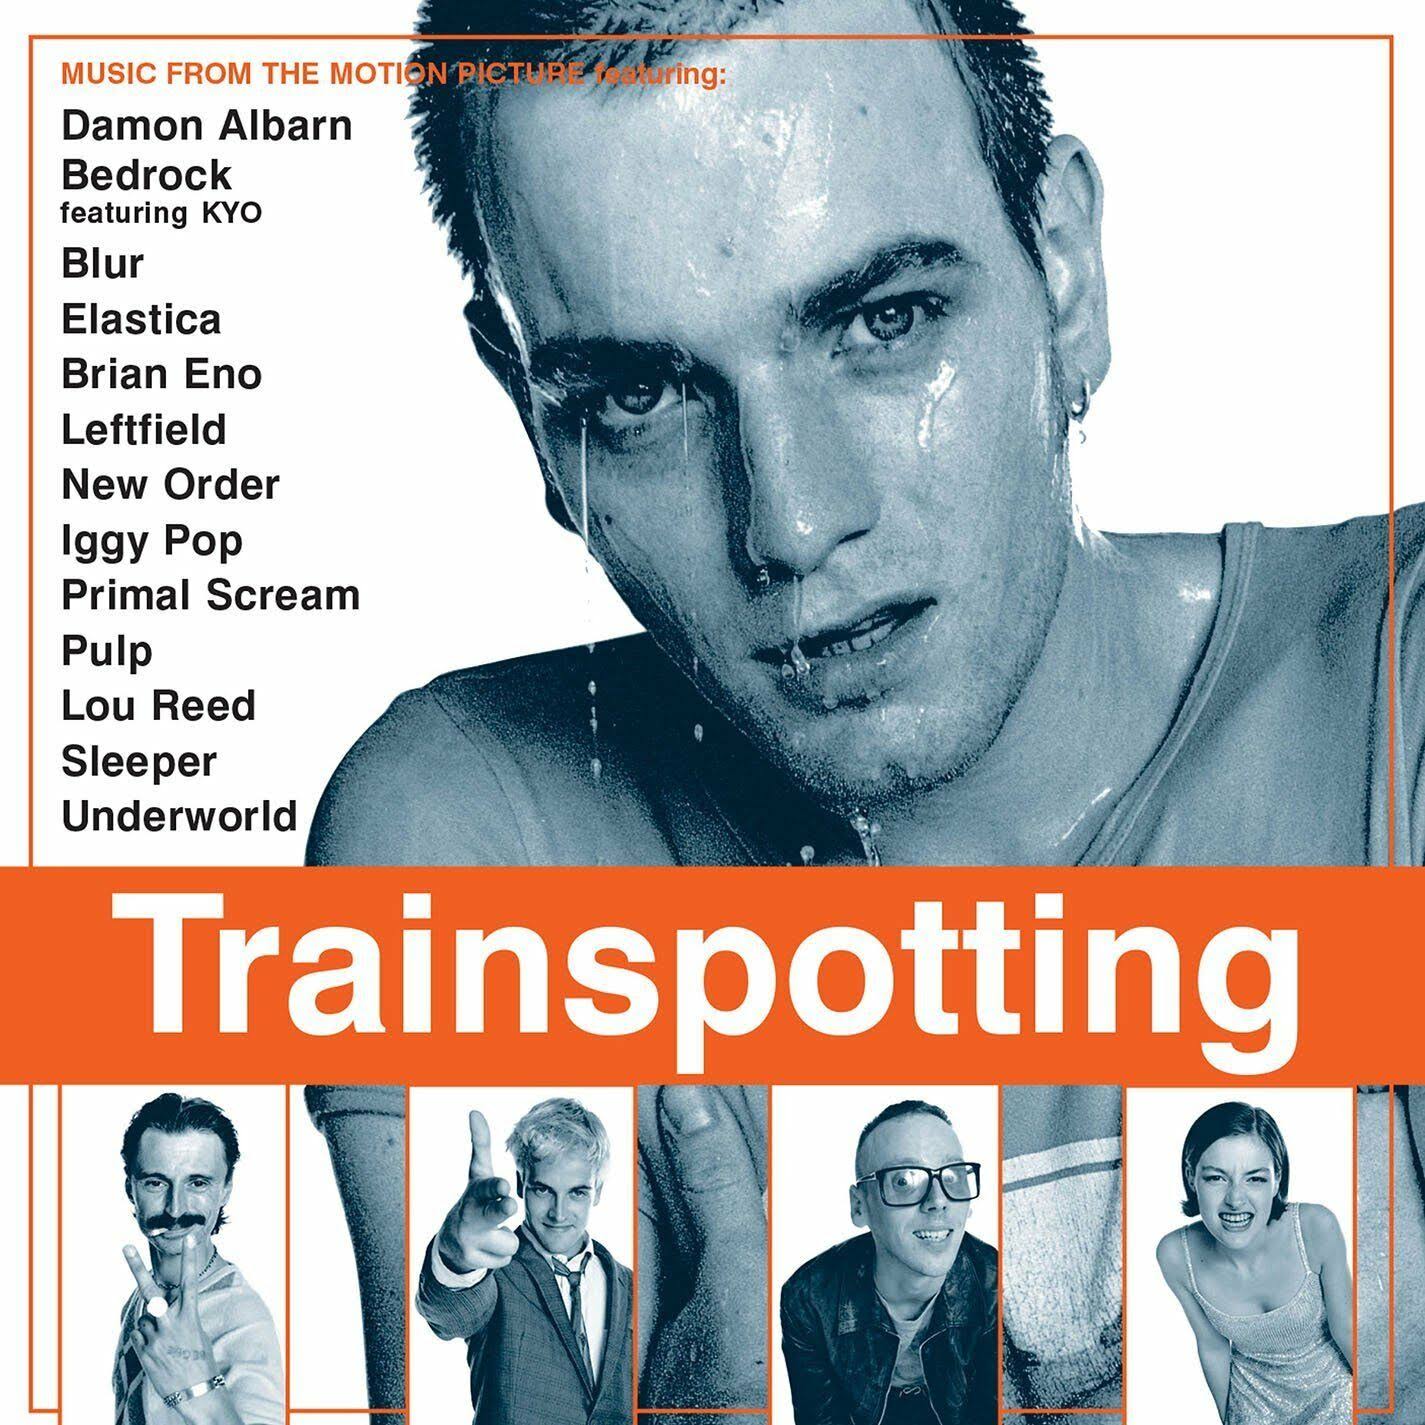 Trainspotting - Various Artists